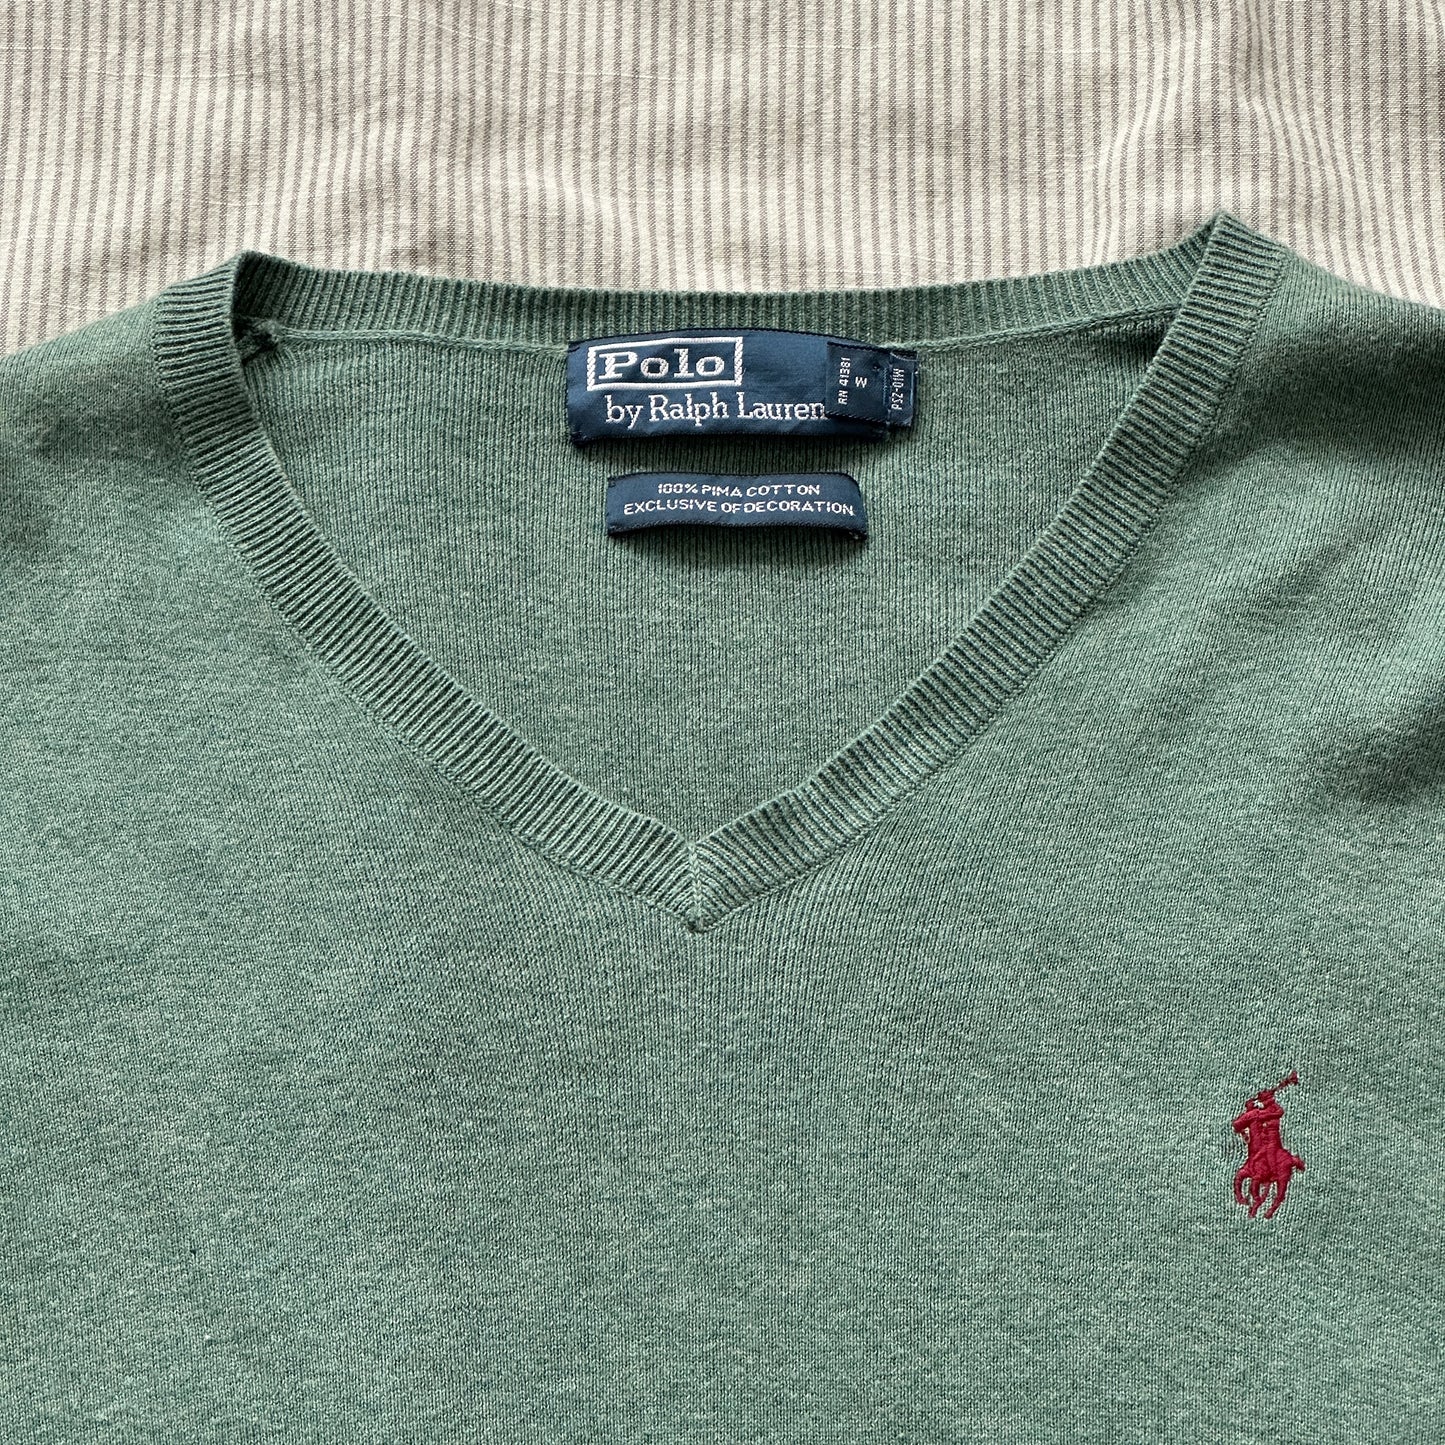 Polo by Ralph Lauren minilogo green knitsweater